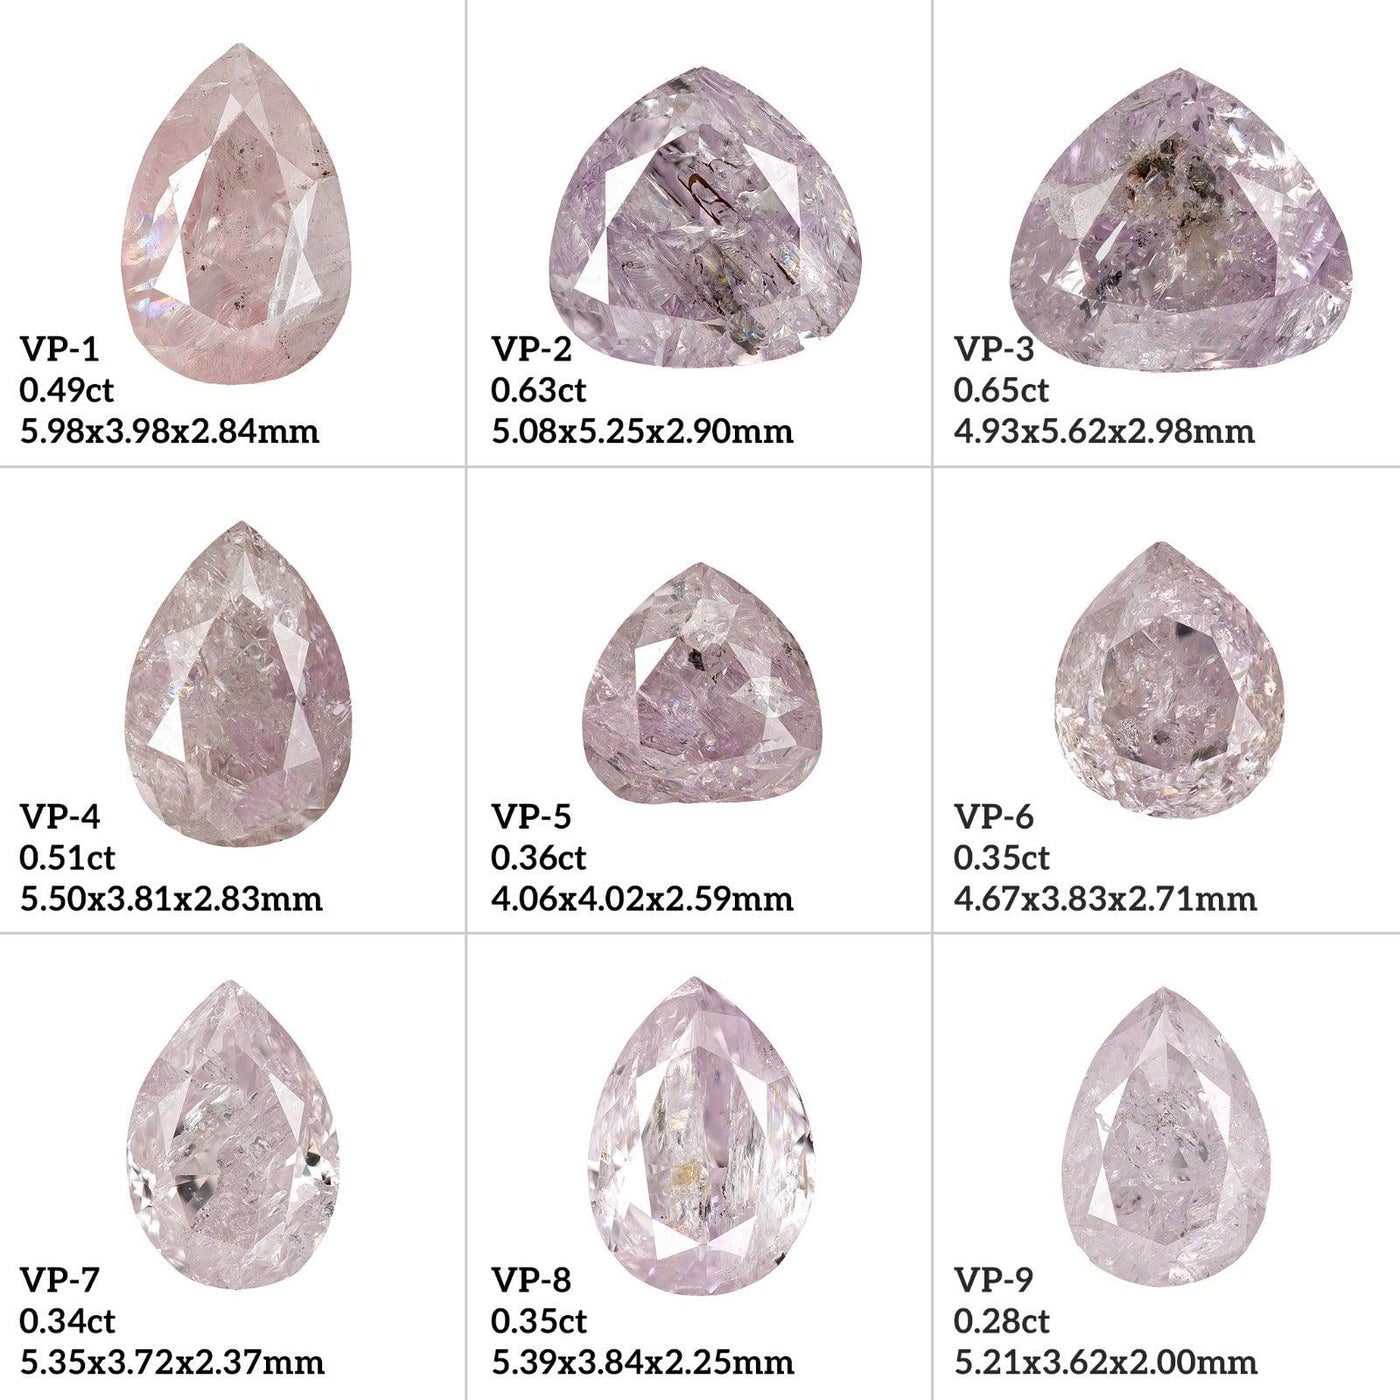 VP5 - Vivid pink pear diamond - Rubysta